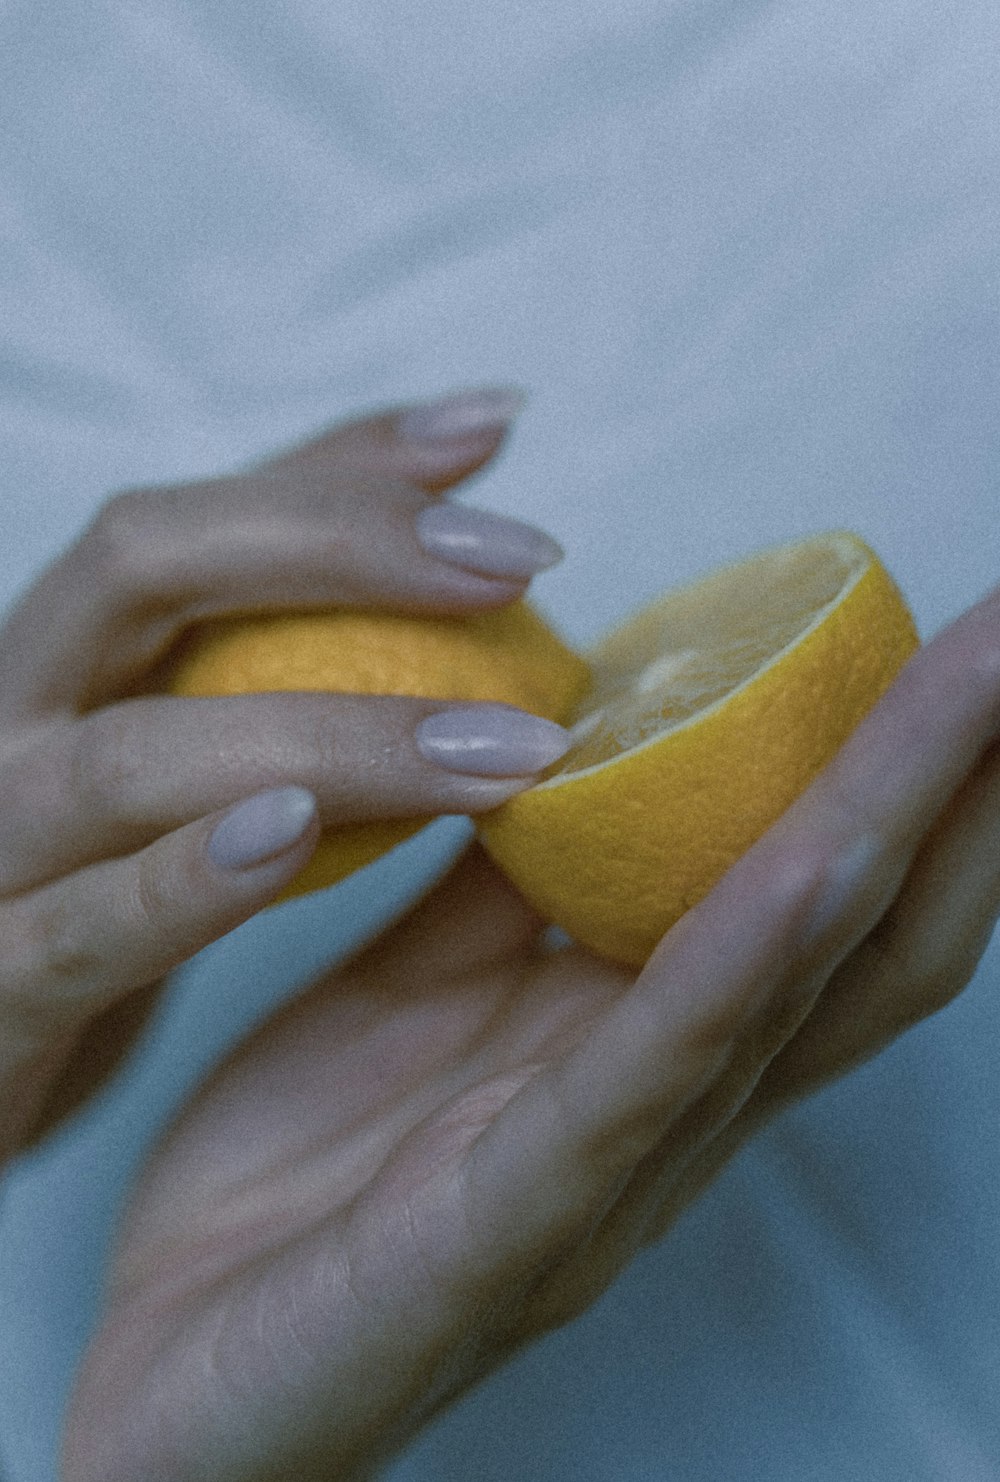 a woman's hands holding a half of a lemon